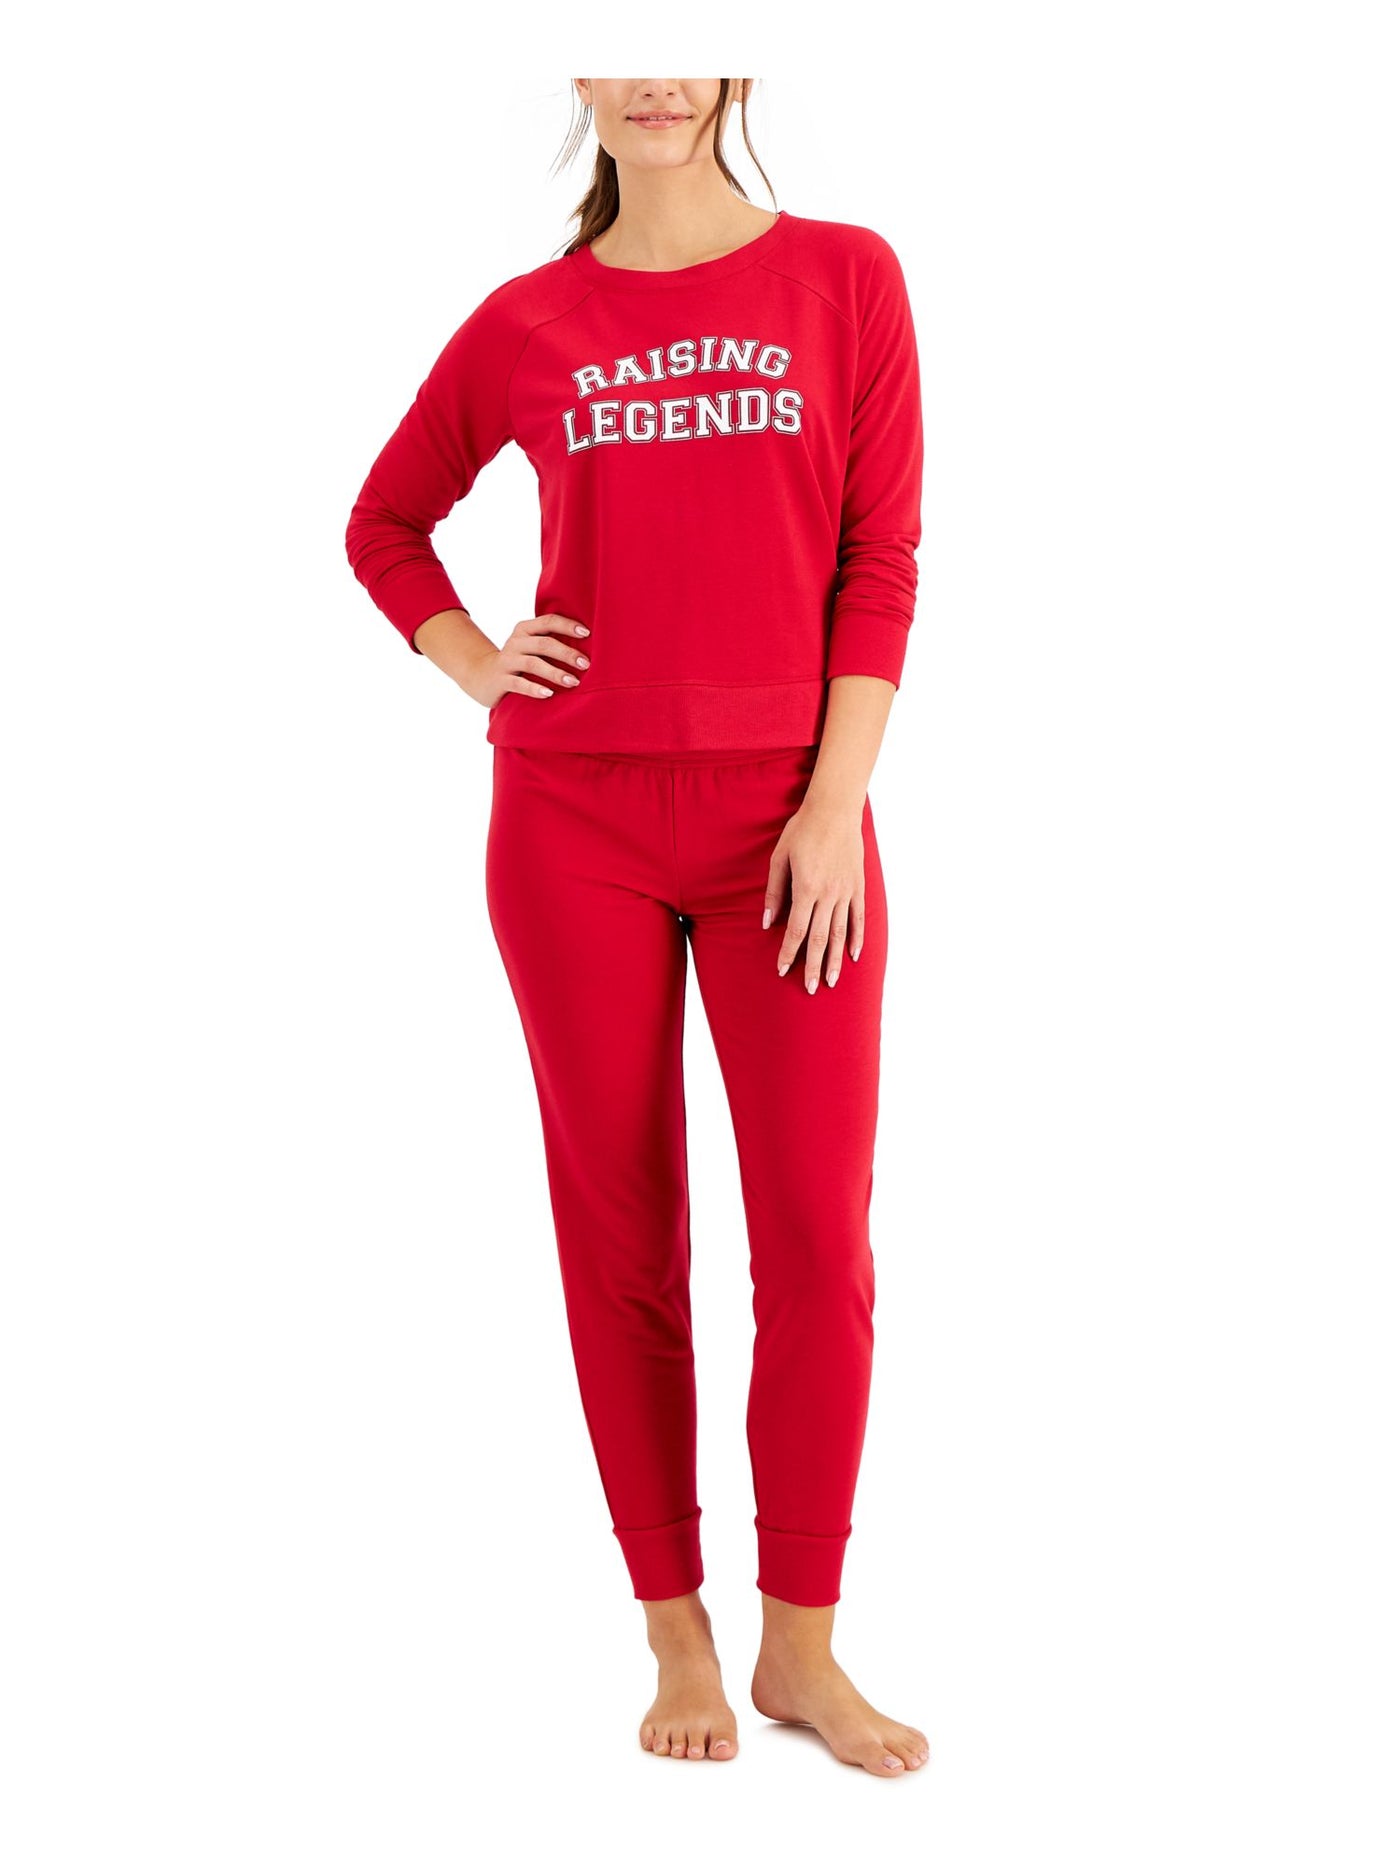 FAMILY PJs Womens Red Printed Top Elastic Band Long Sleeve Lounge Pants Pajamas M